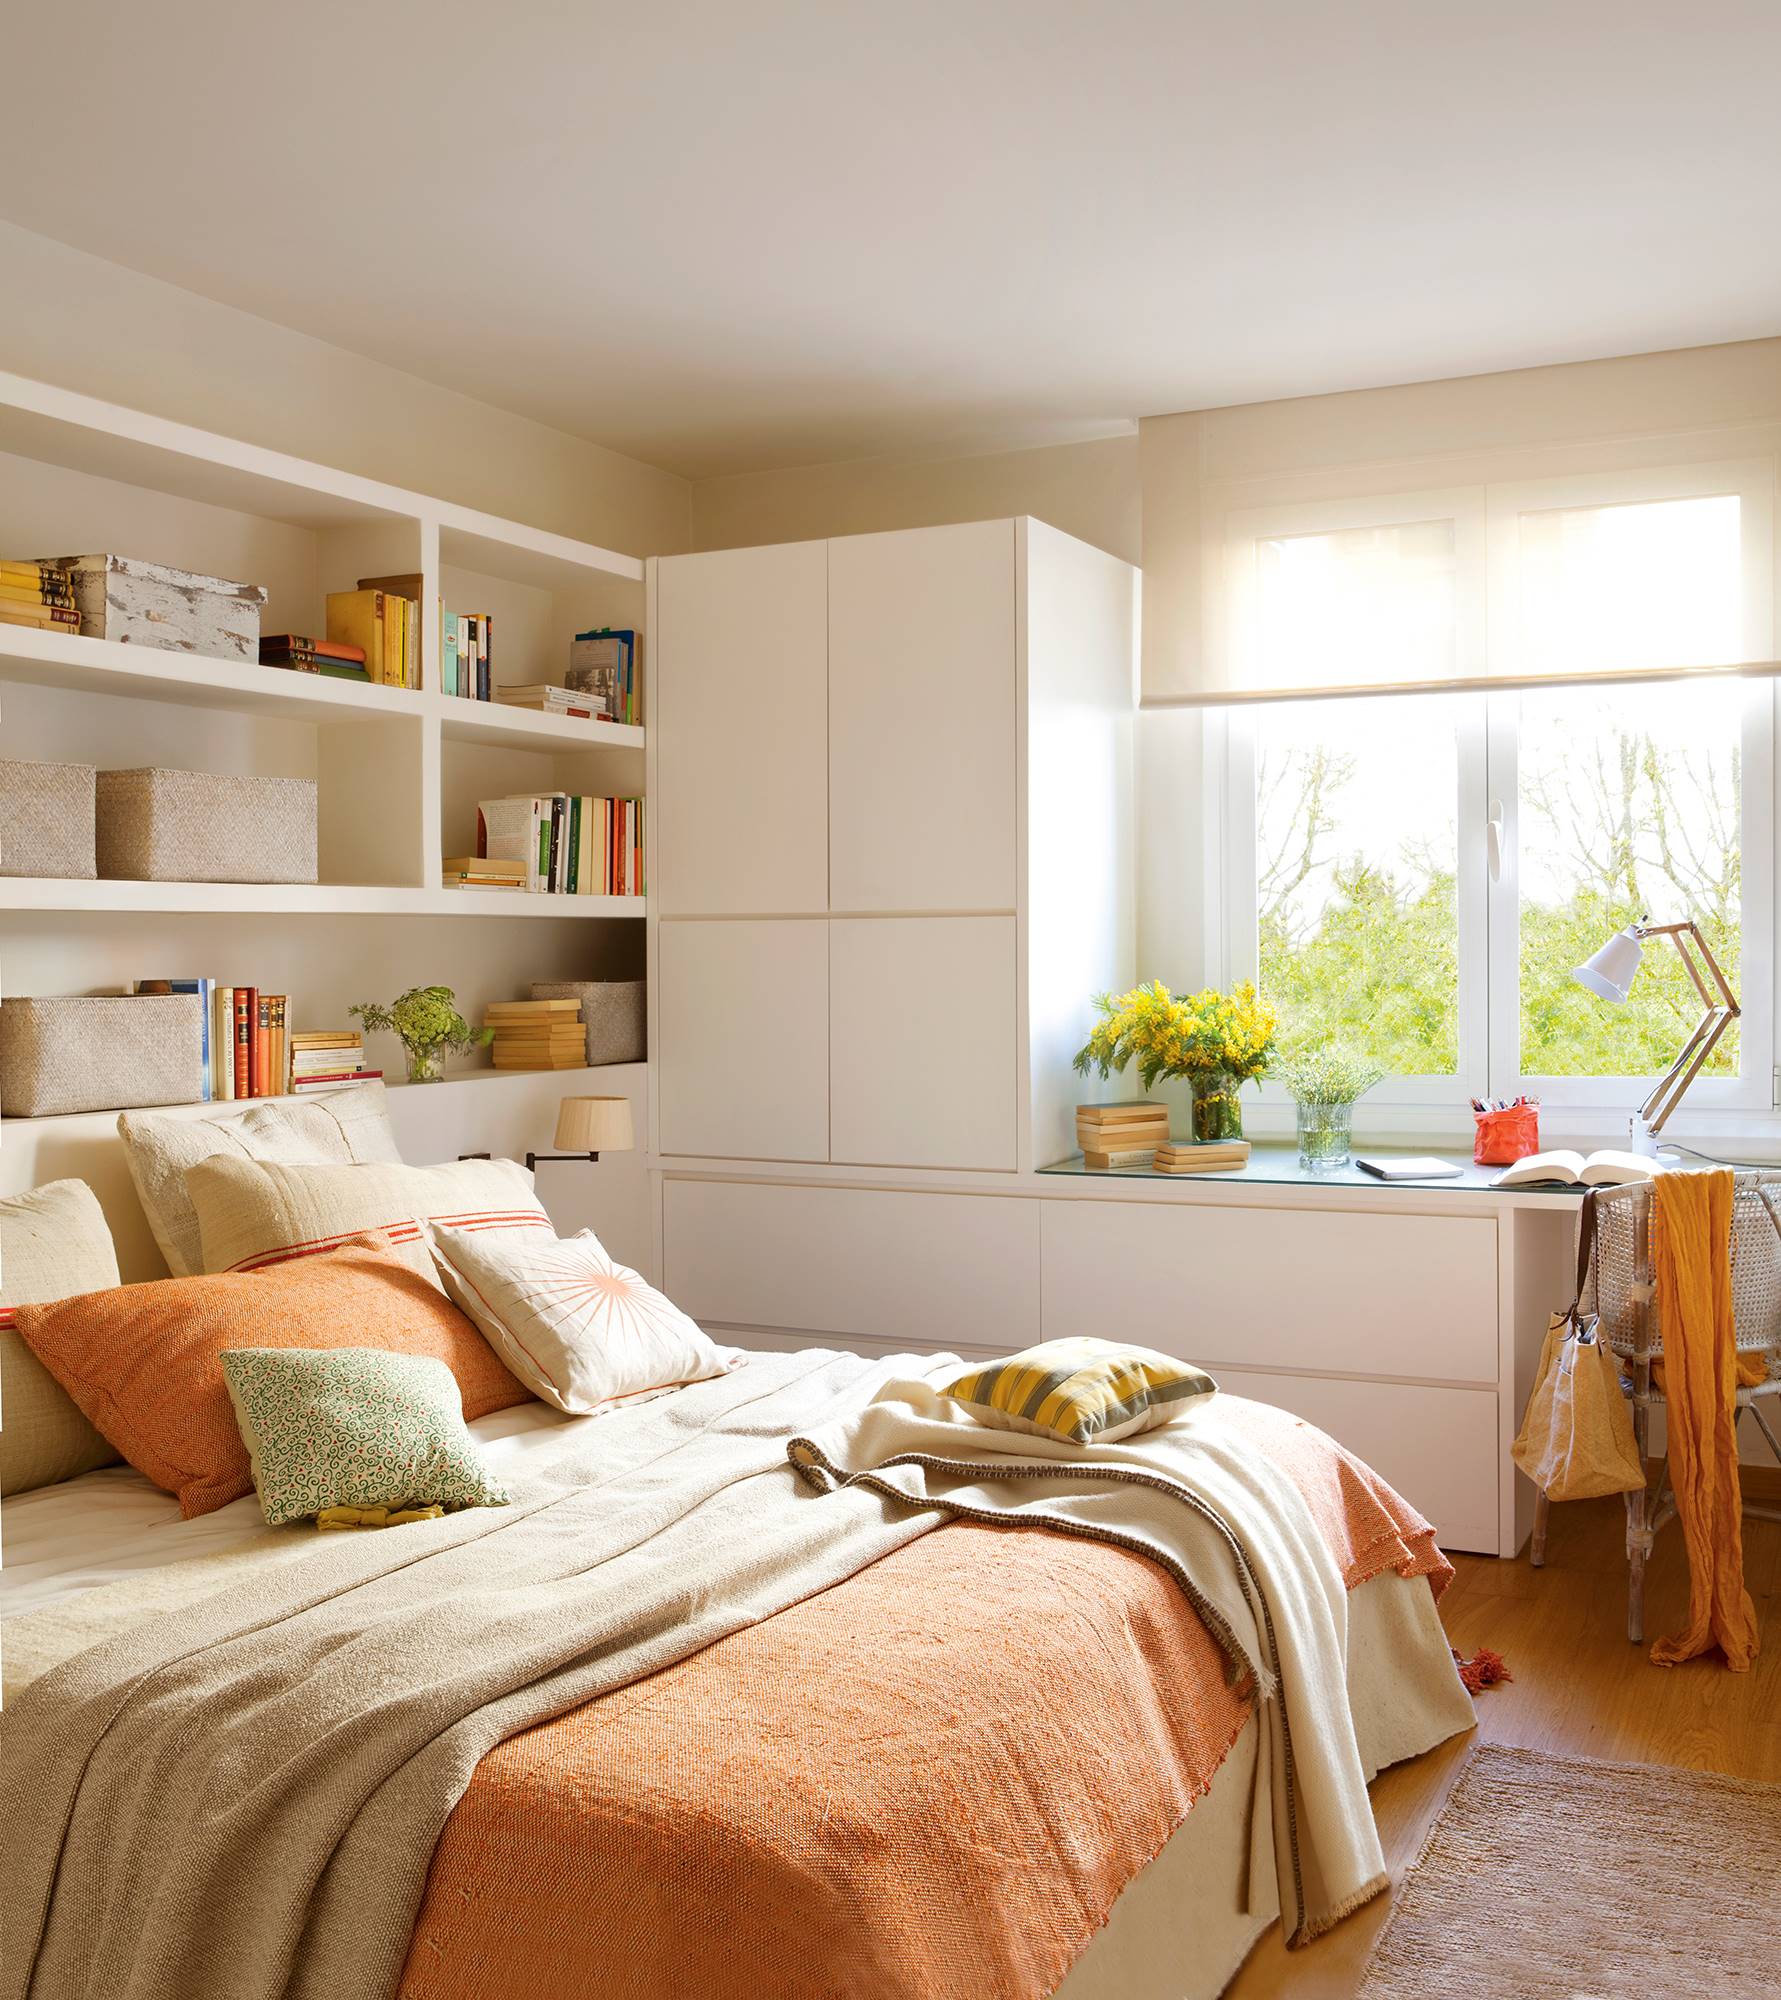 Dormitorio con librería a modo de cabecero